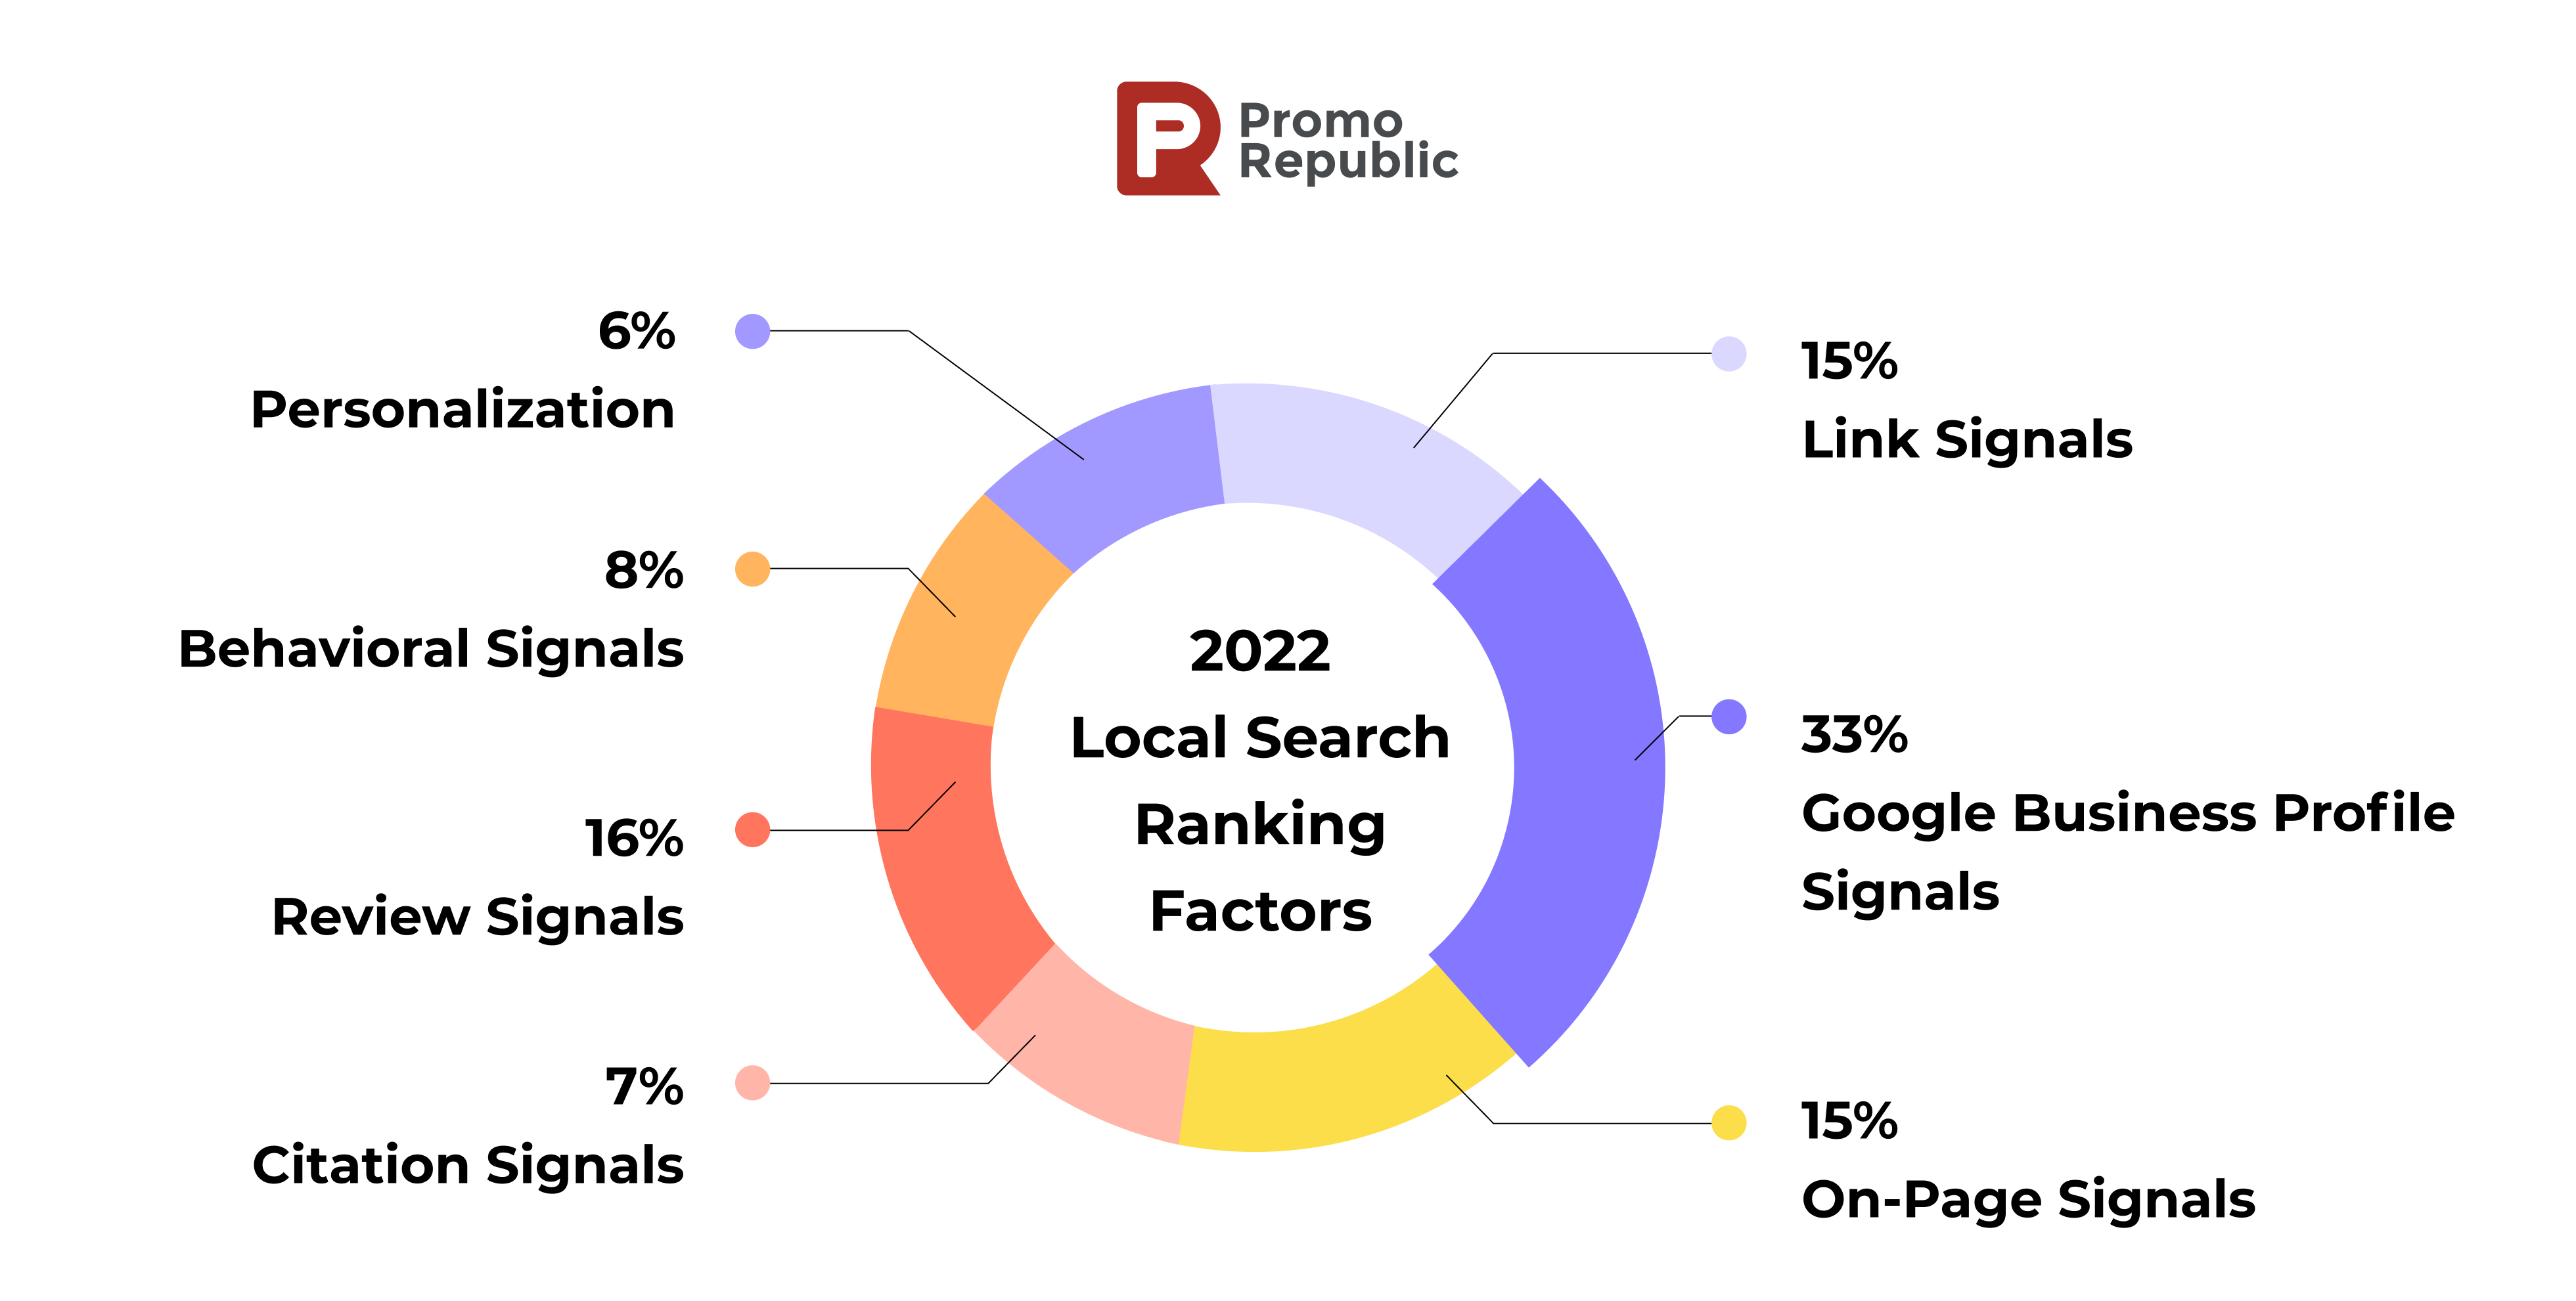 2022 Local Search Ranking Factors